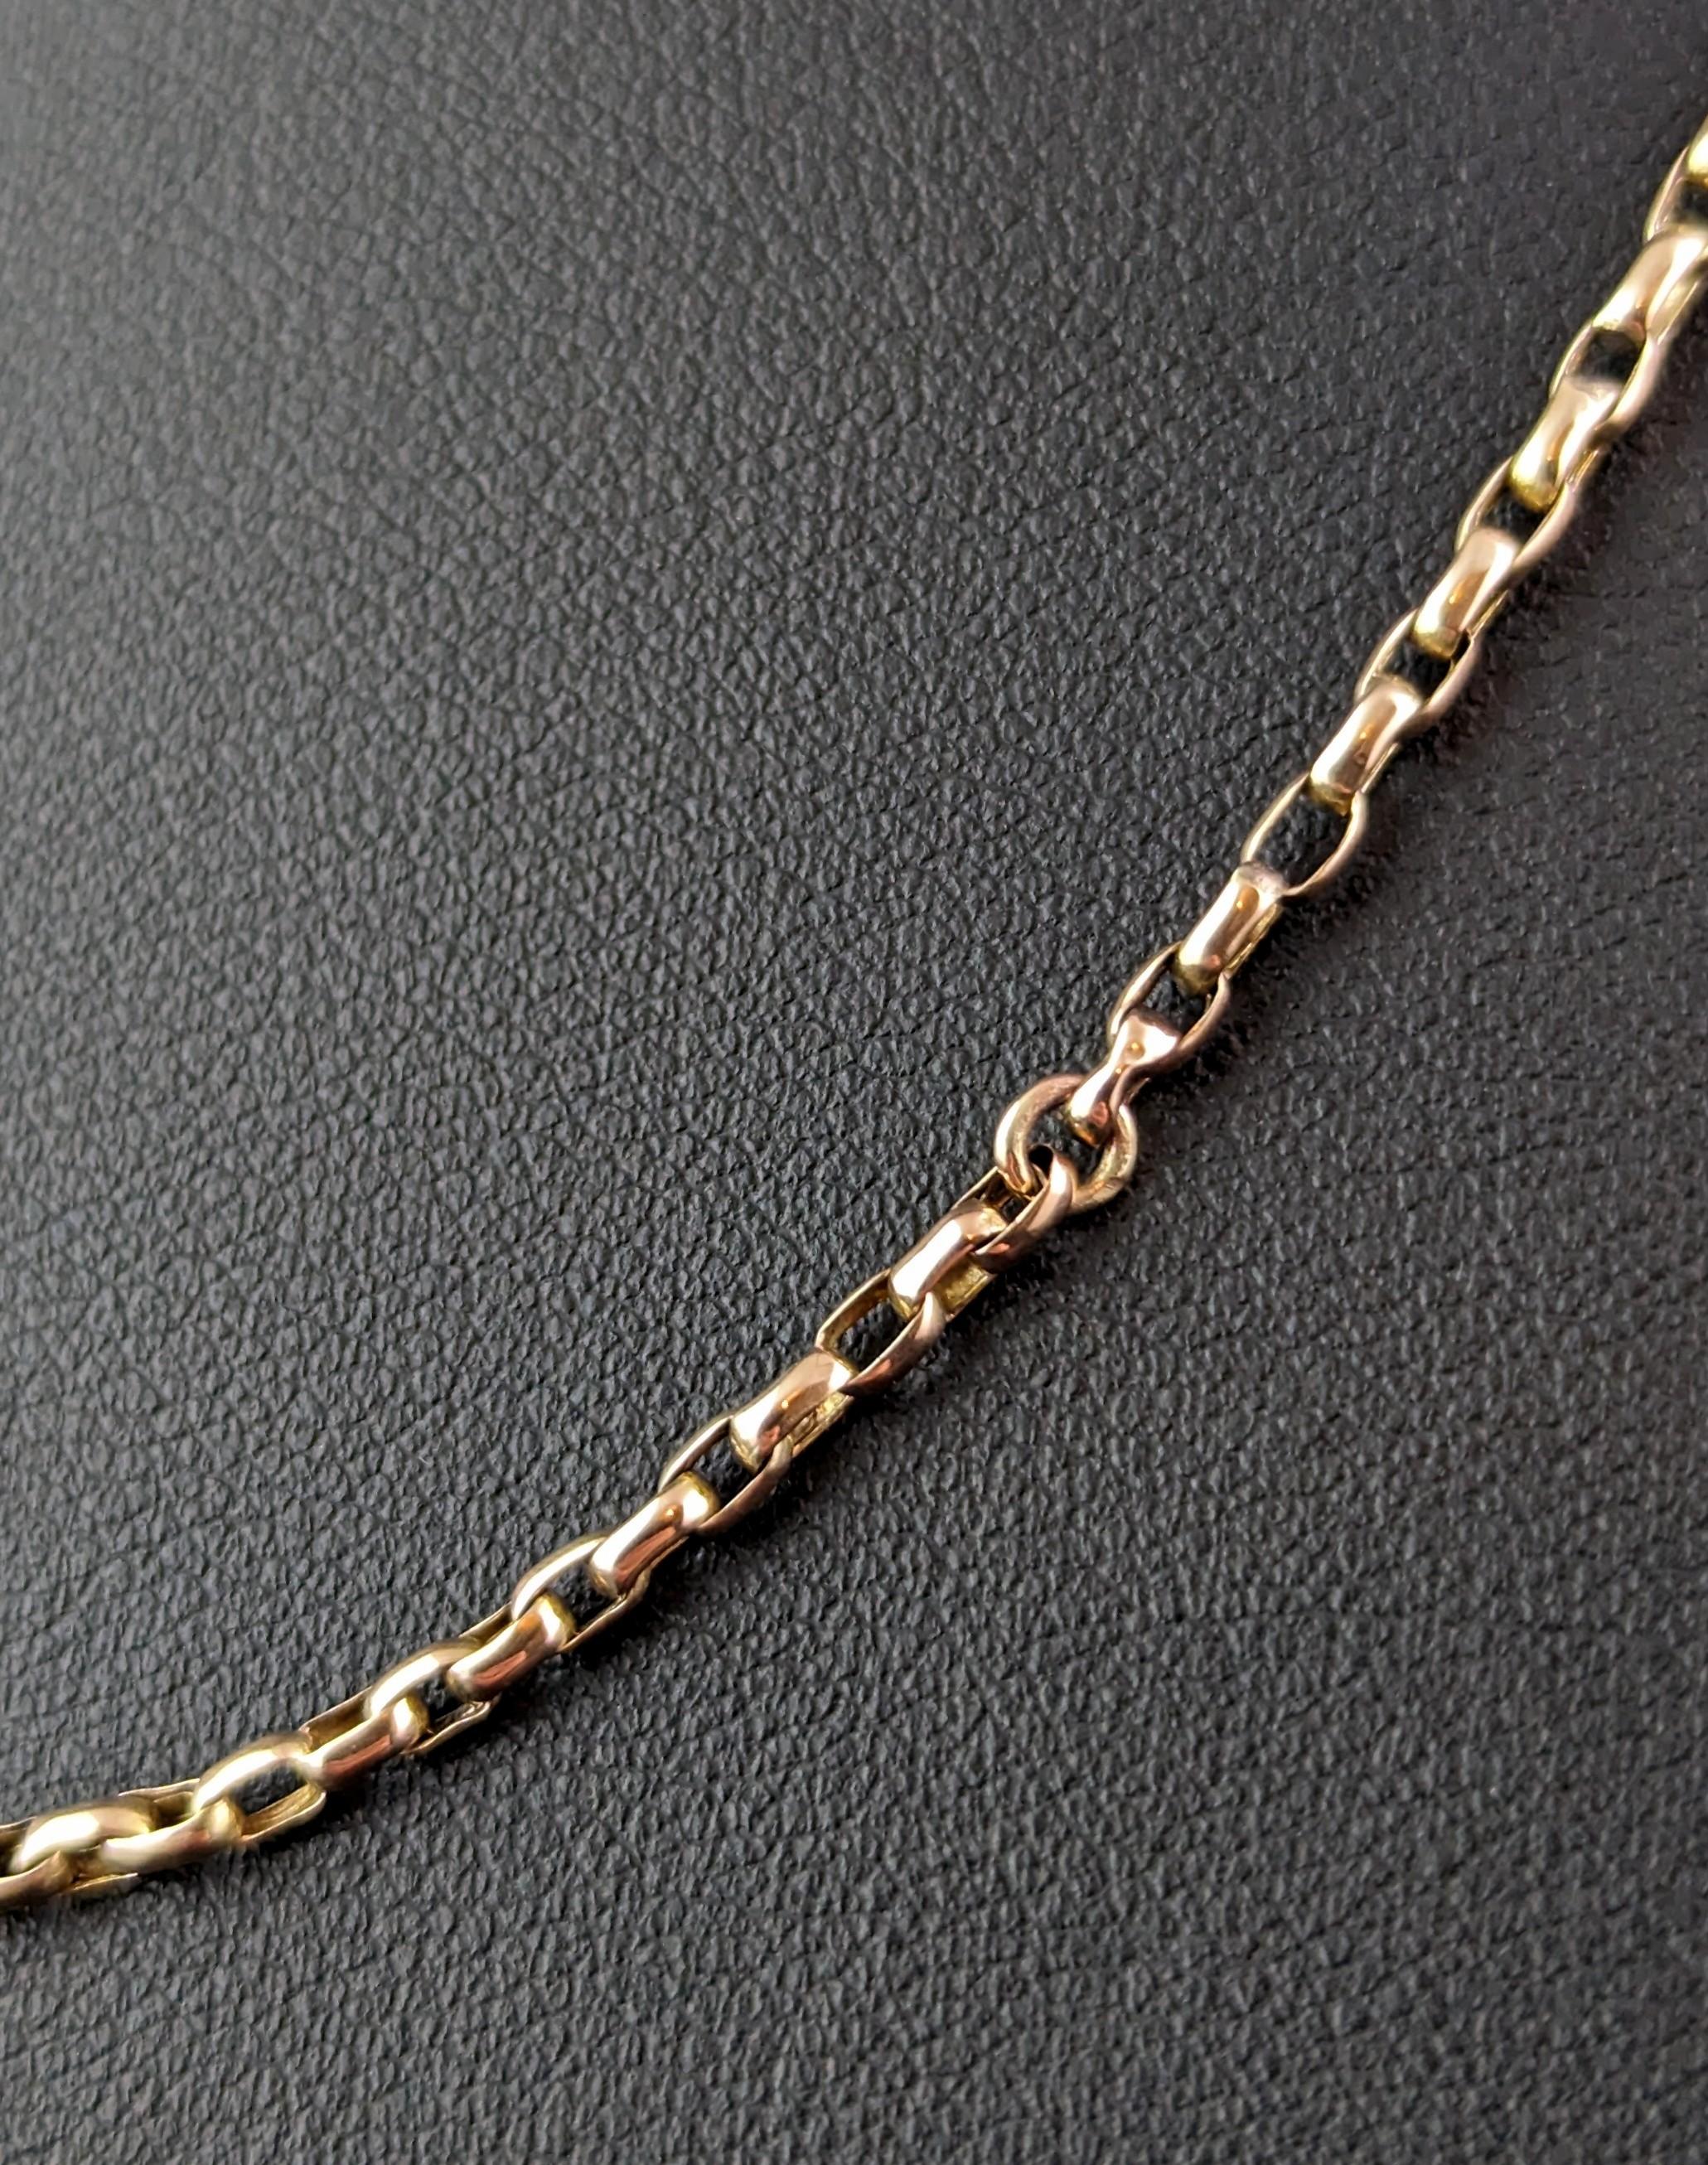 Antique 9k gold belcher link chain necklace  2